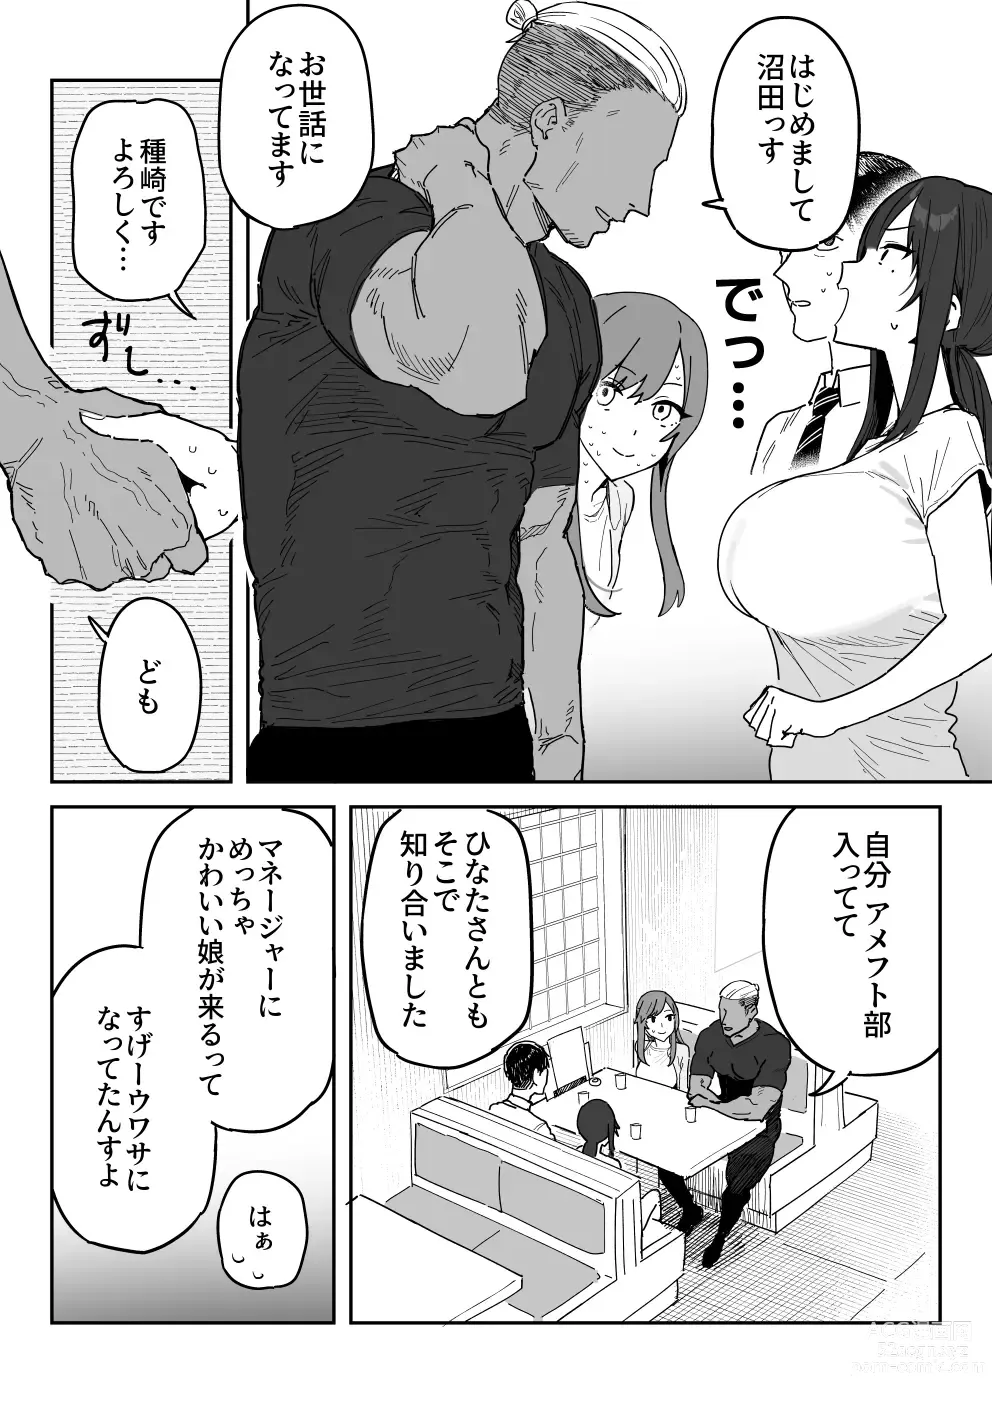 Page 5 of doujinshi Tanesaki Kaori (39), Musume no Kawari ni Doujin AV Debut